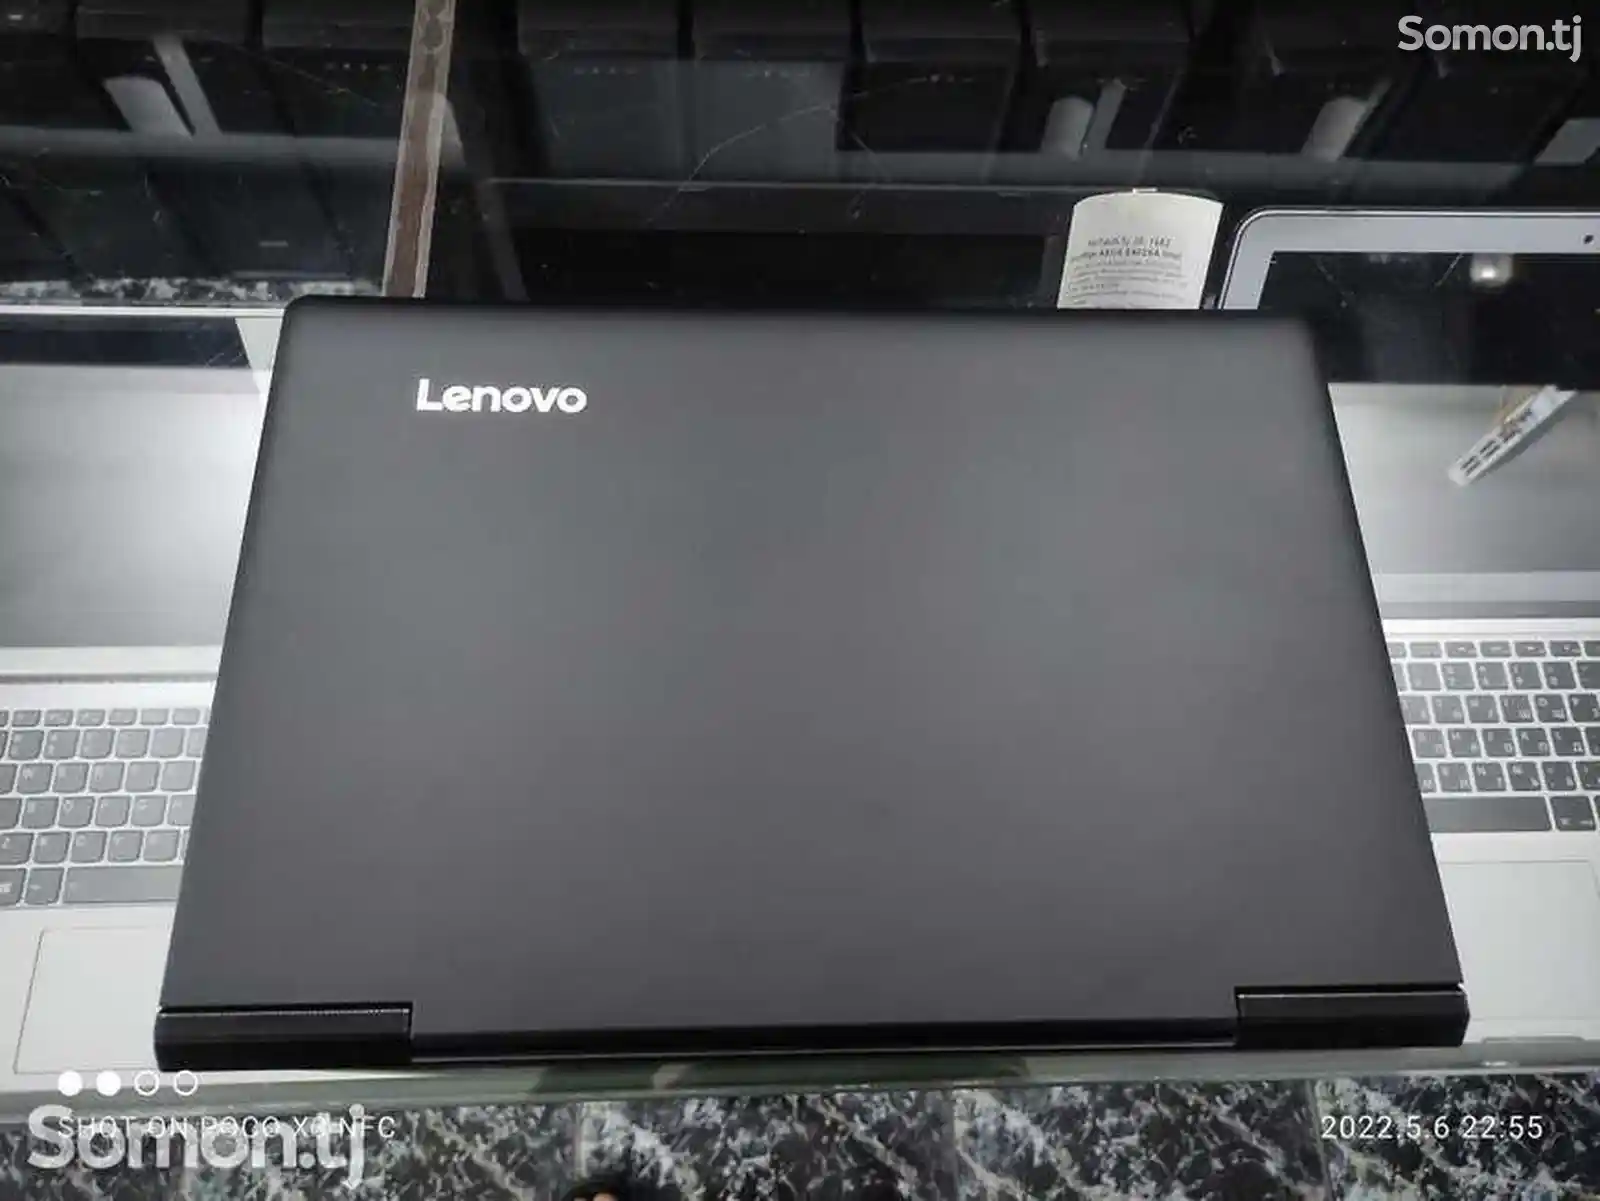 Игровой ноутбук Lenovo 700 Gaming Core i5-6300HQ GTX 950M 4GB 6TH GEN-5